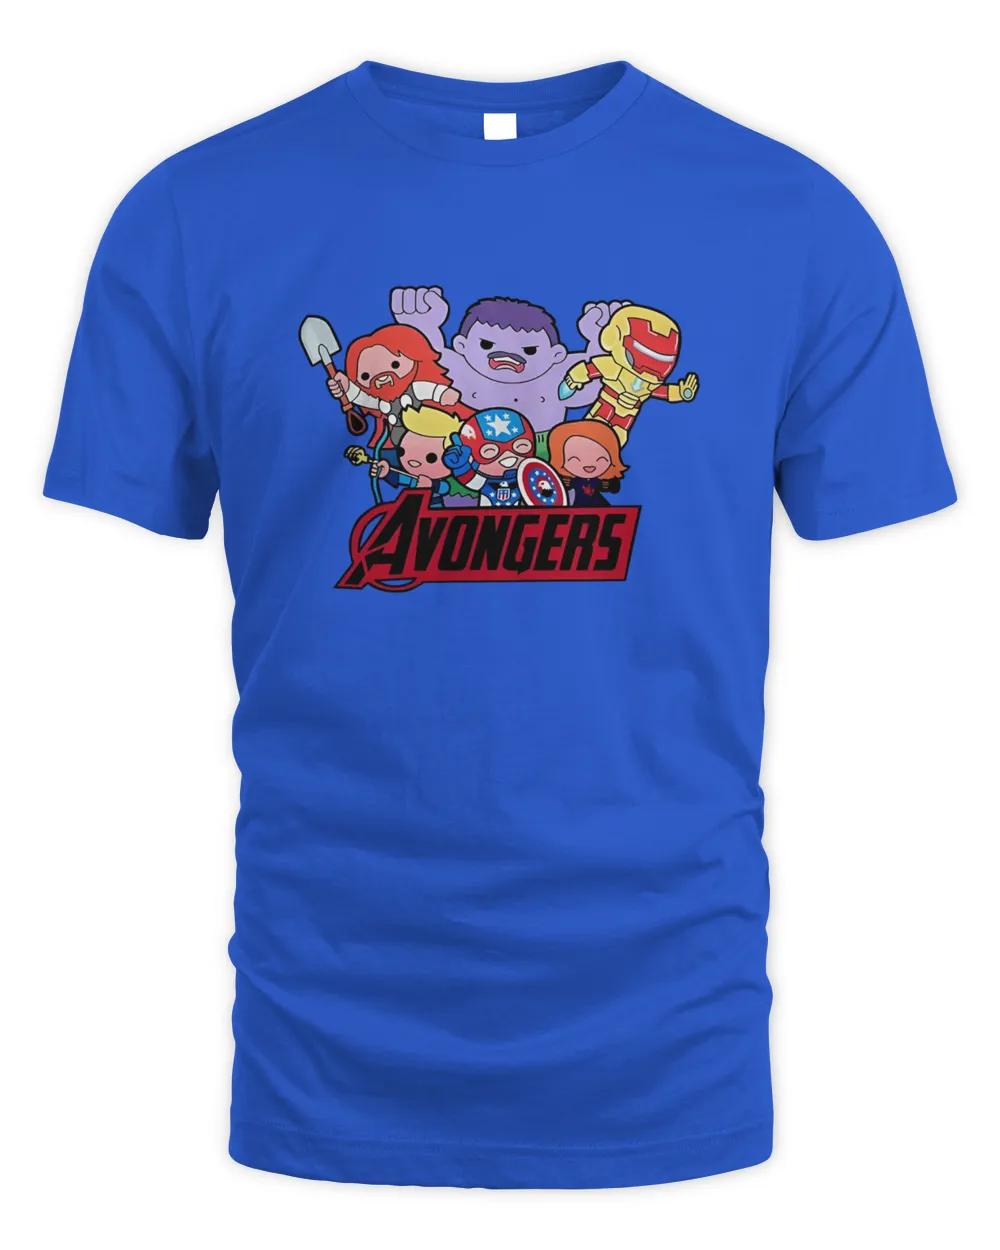 Avongers Shirt